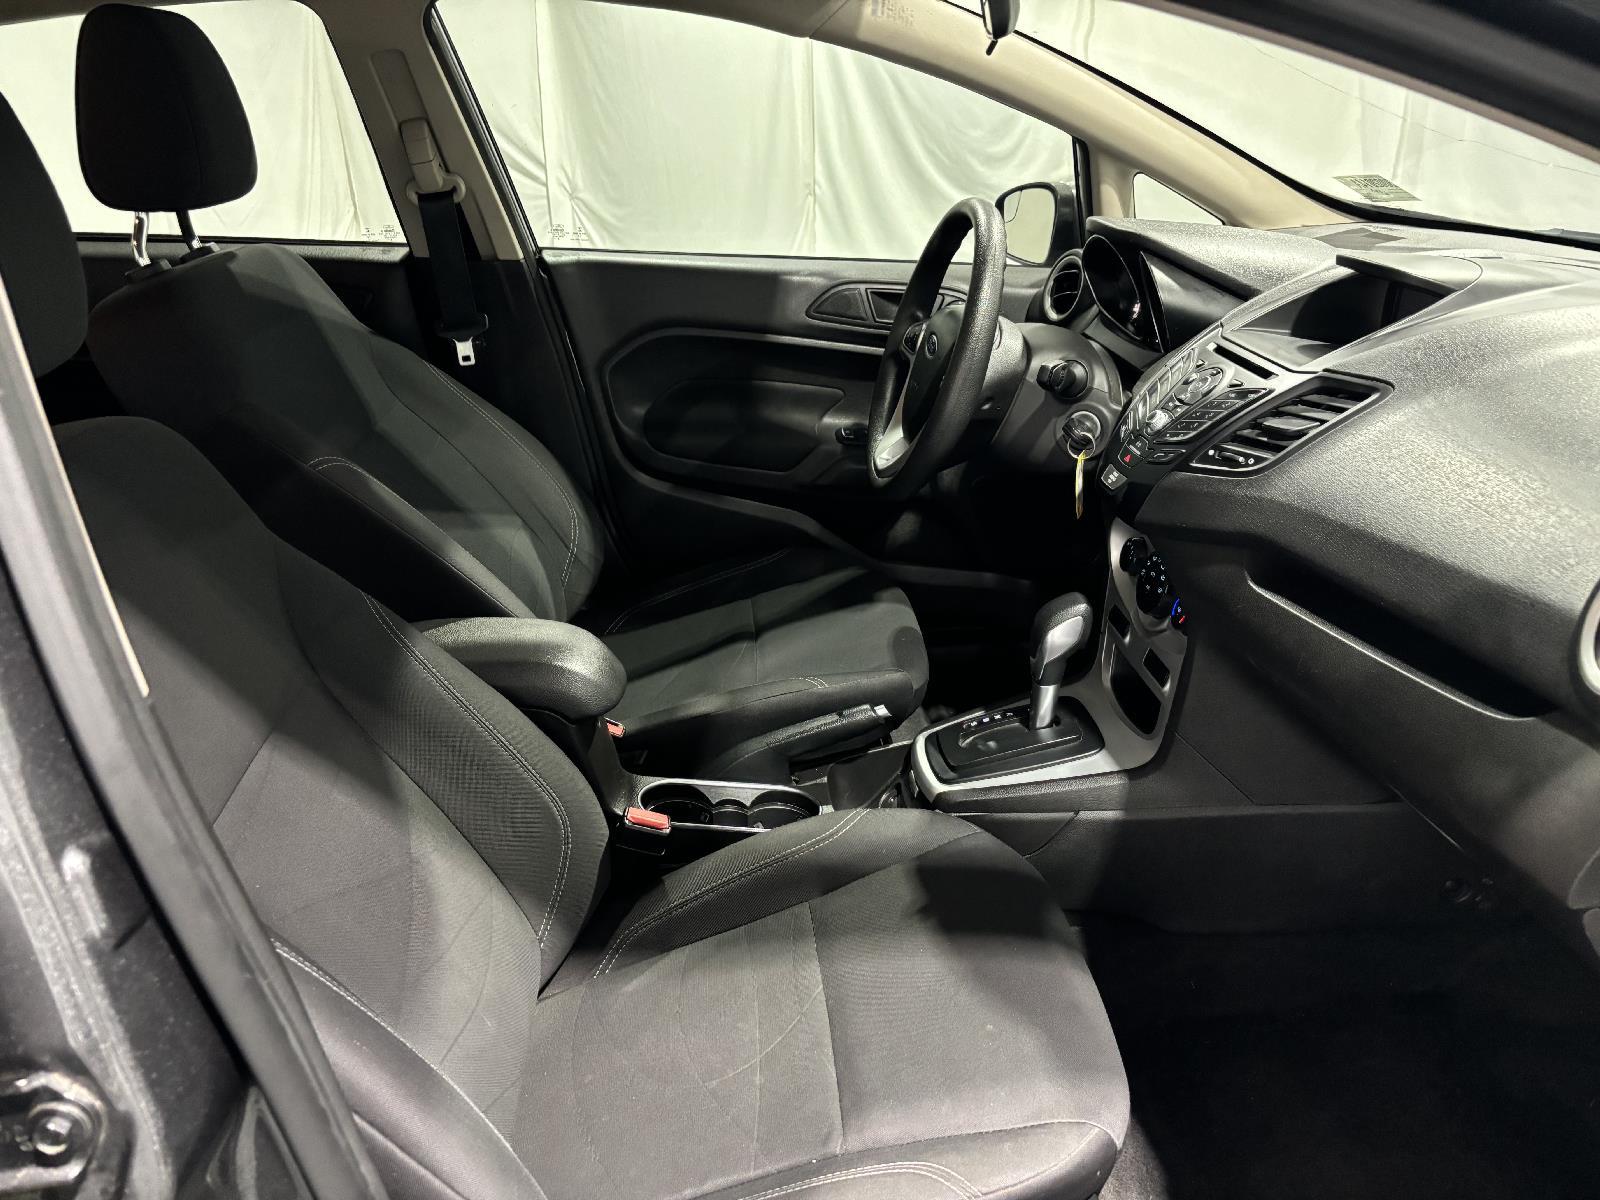 Used 2019 Ford Fiesta SE Sedan for sale in St Joseph MO